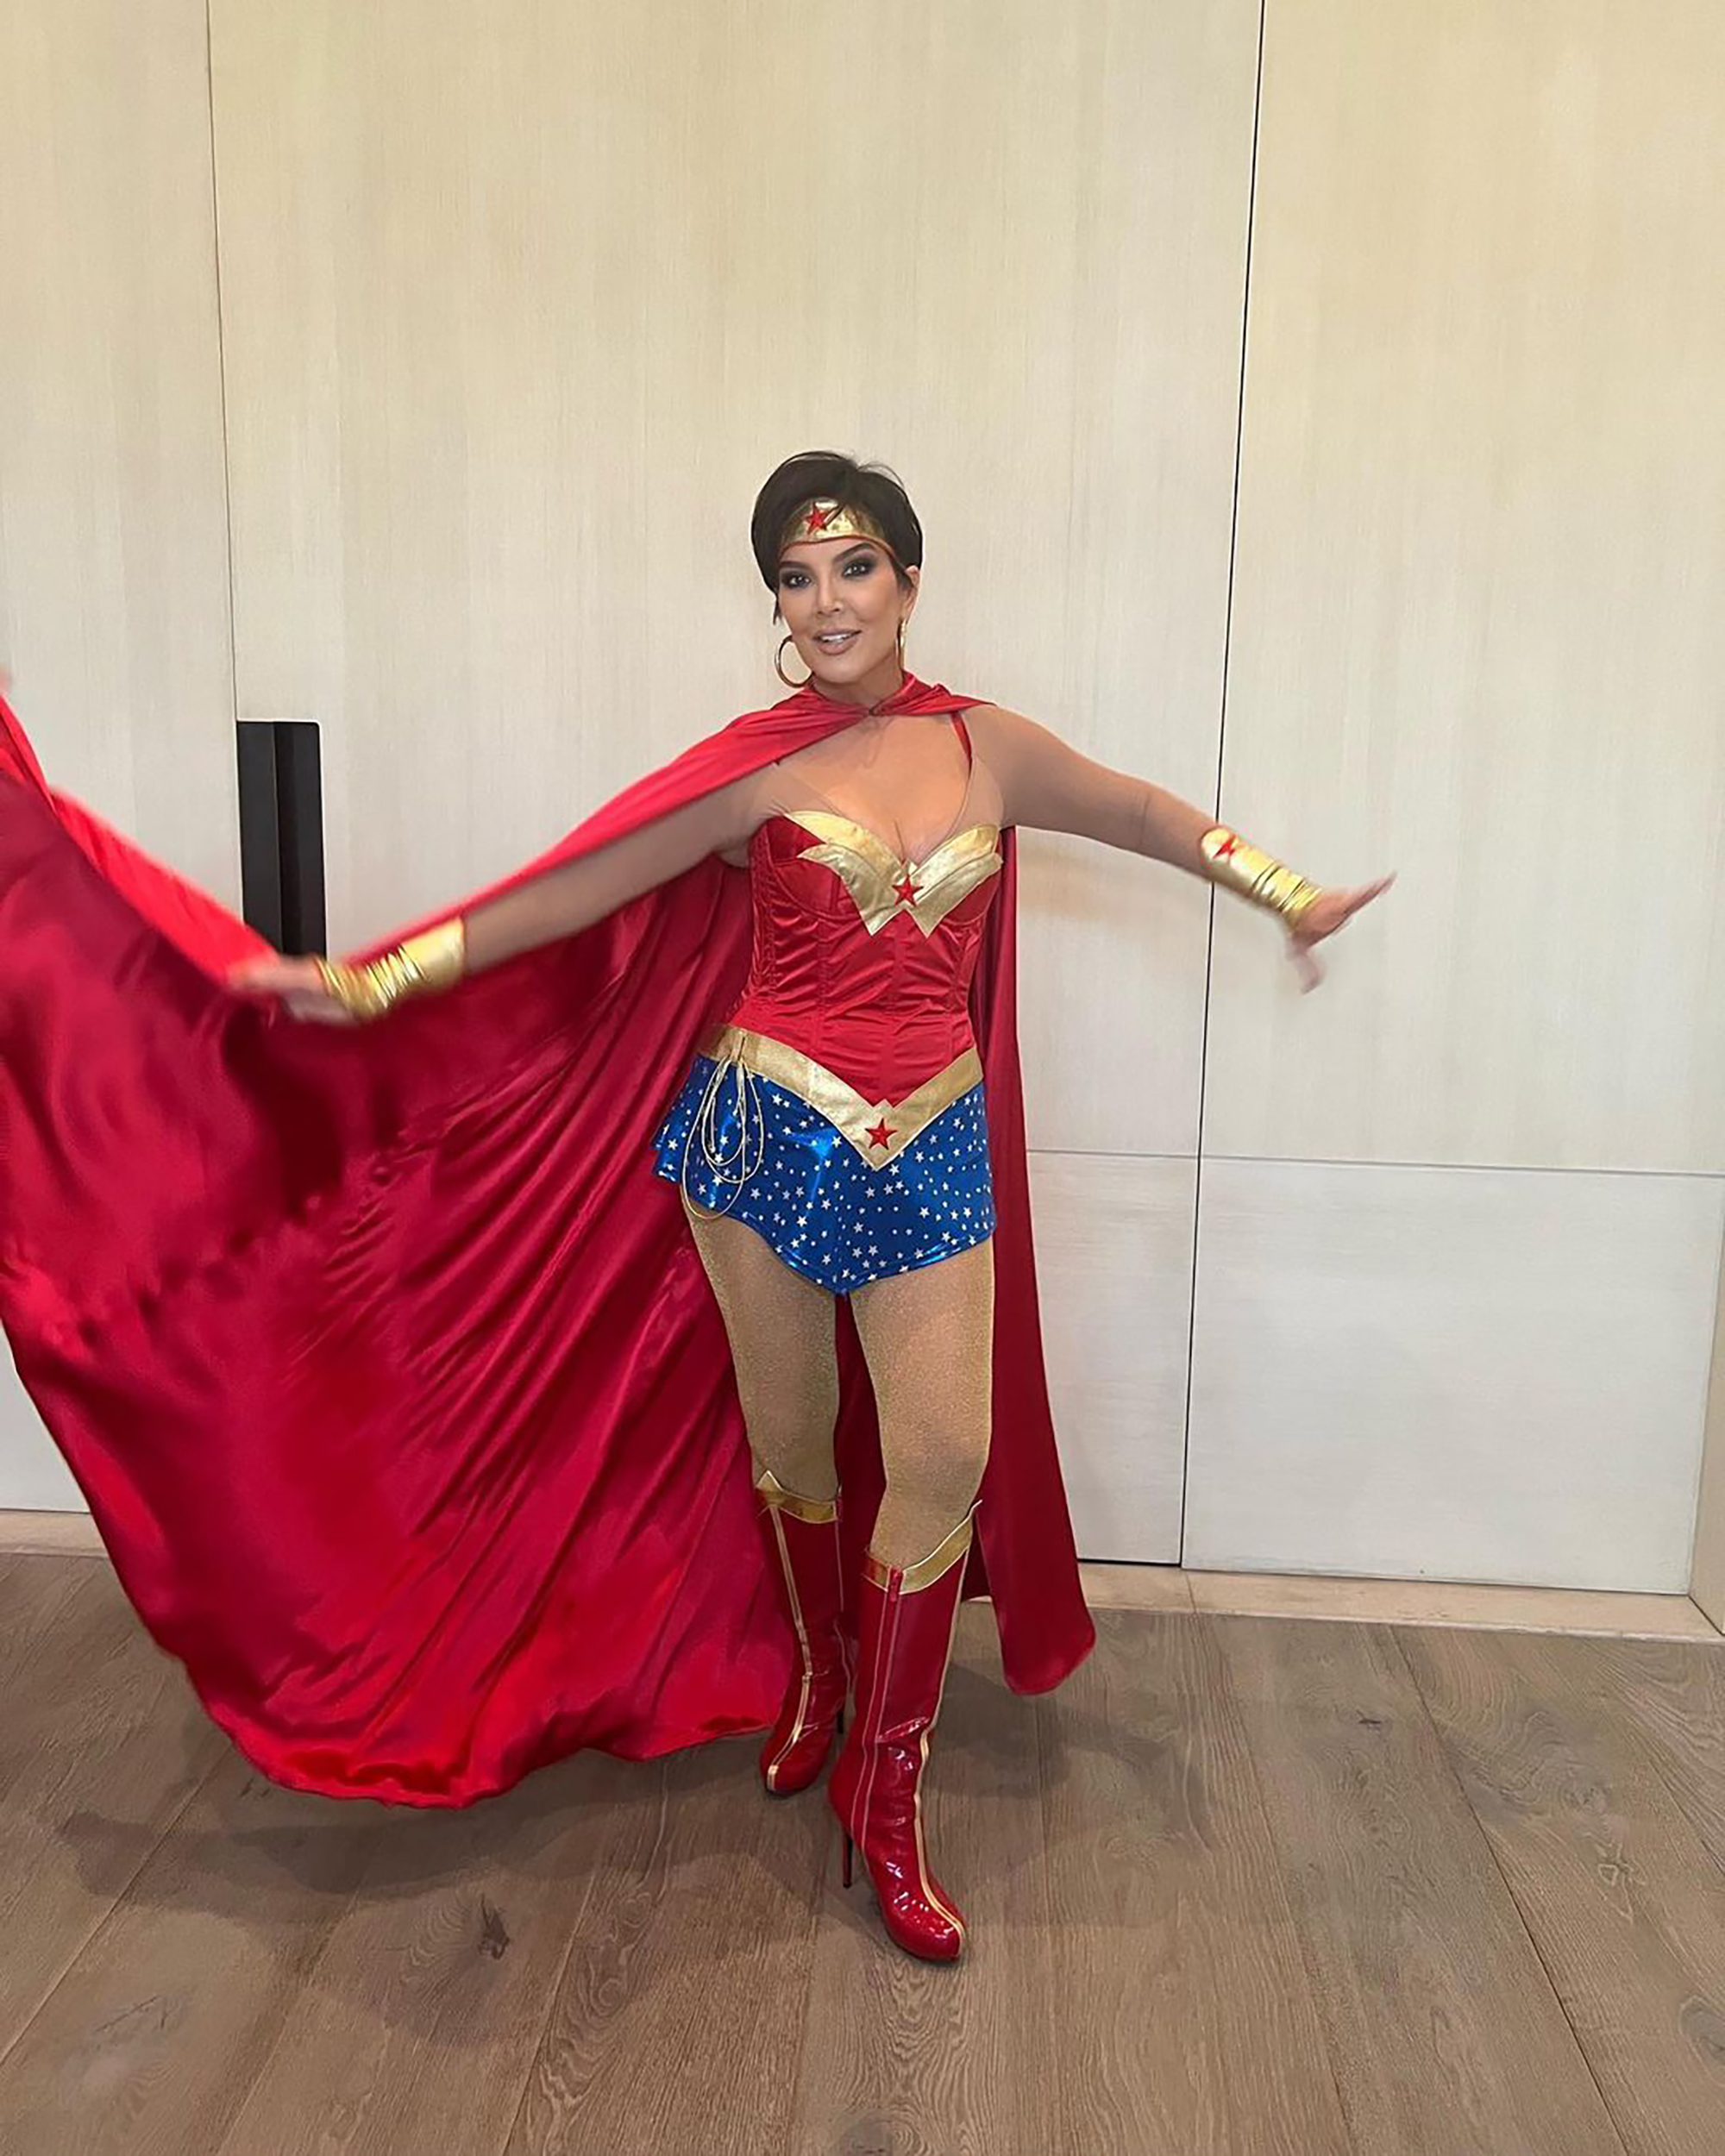 Kris Jenner as Wonder Woman - 